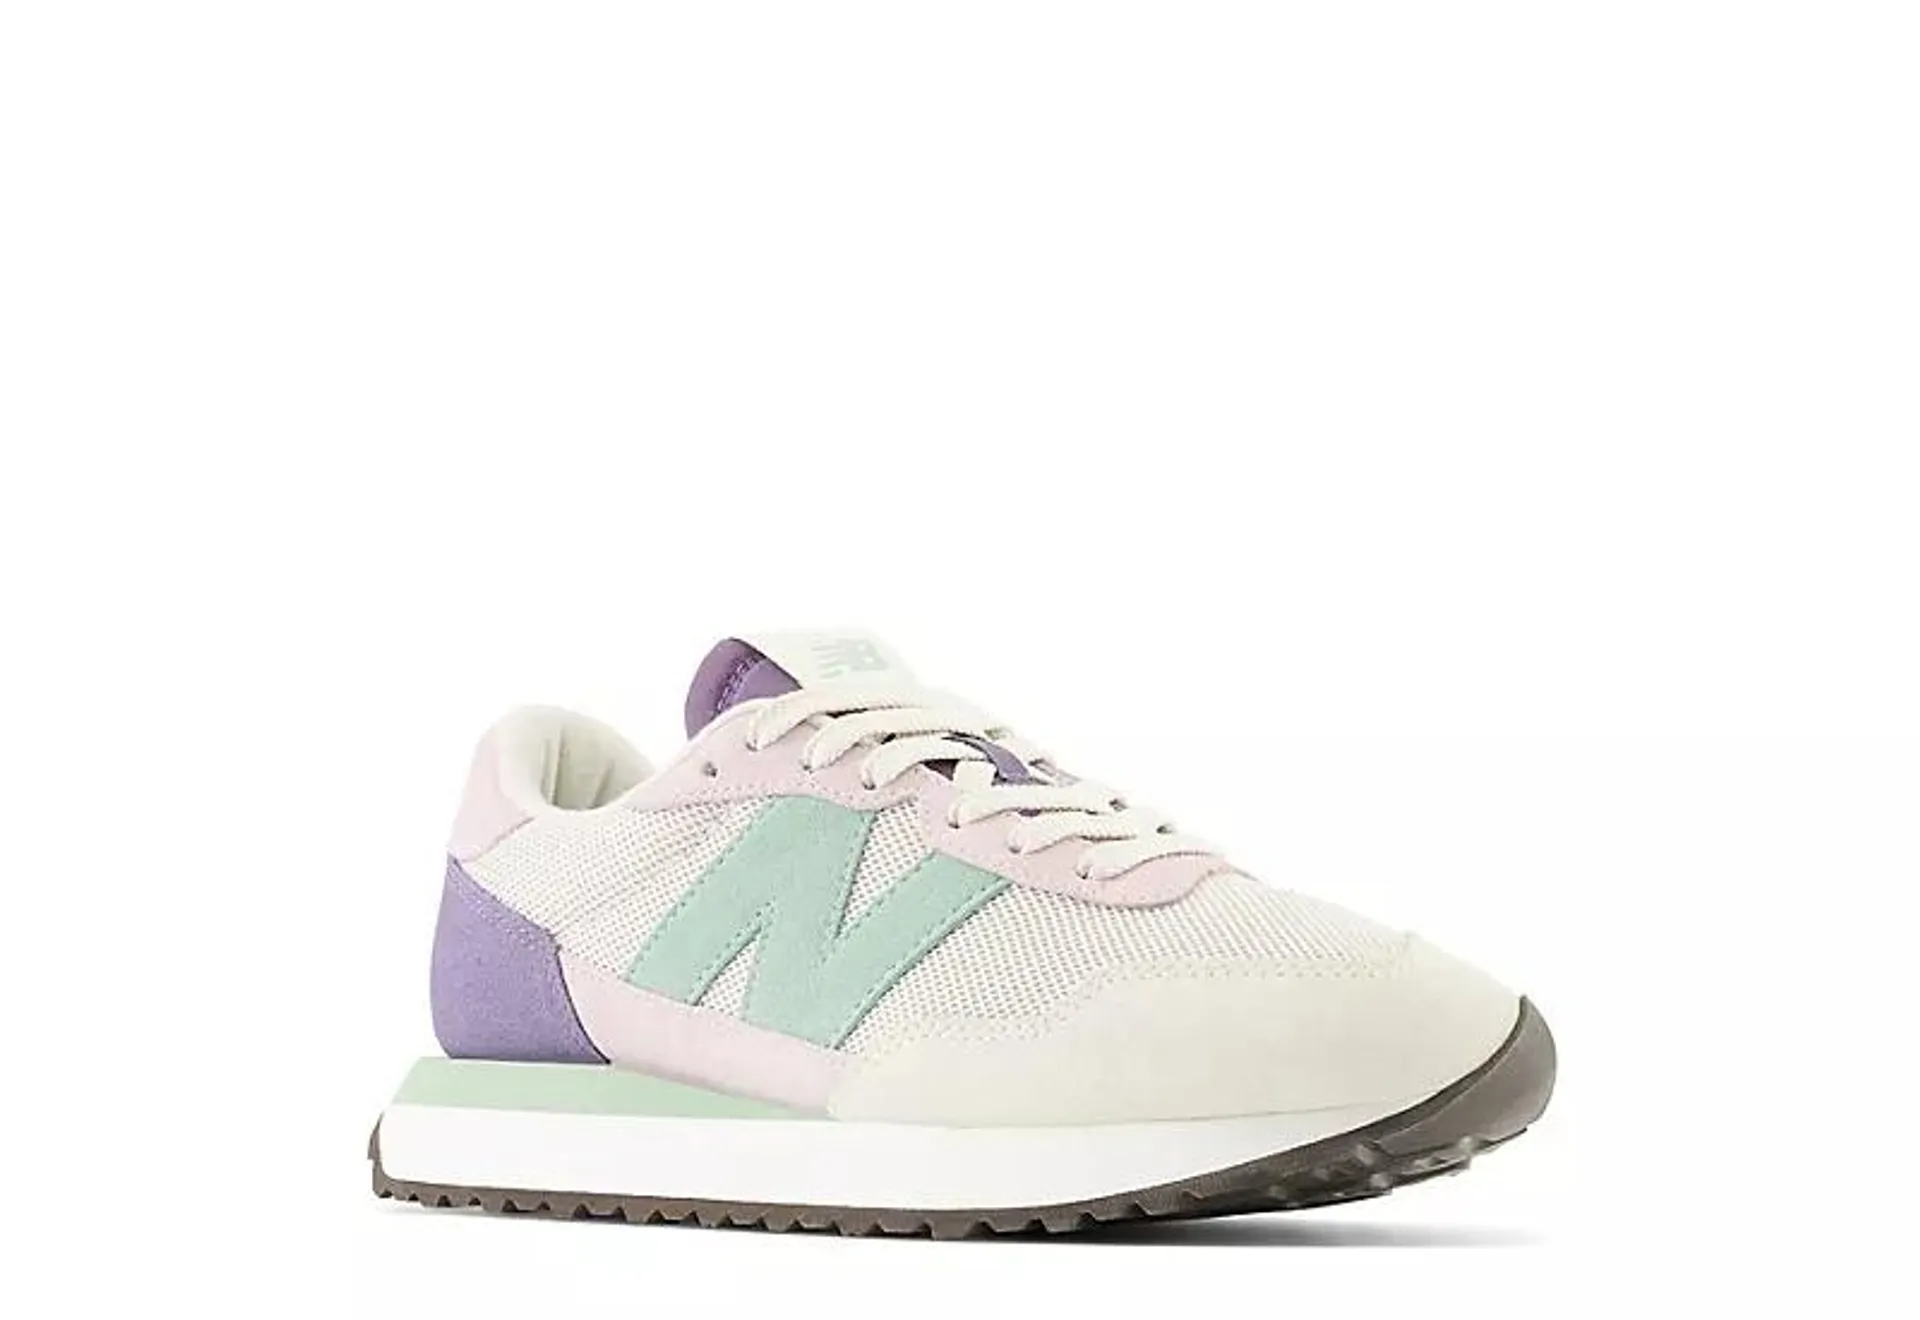 New Balance Womens 237 Sneaker - Pale Grey